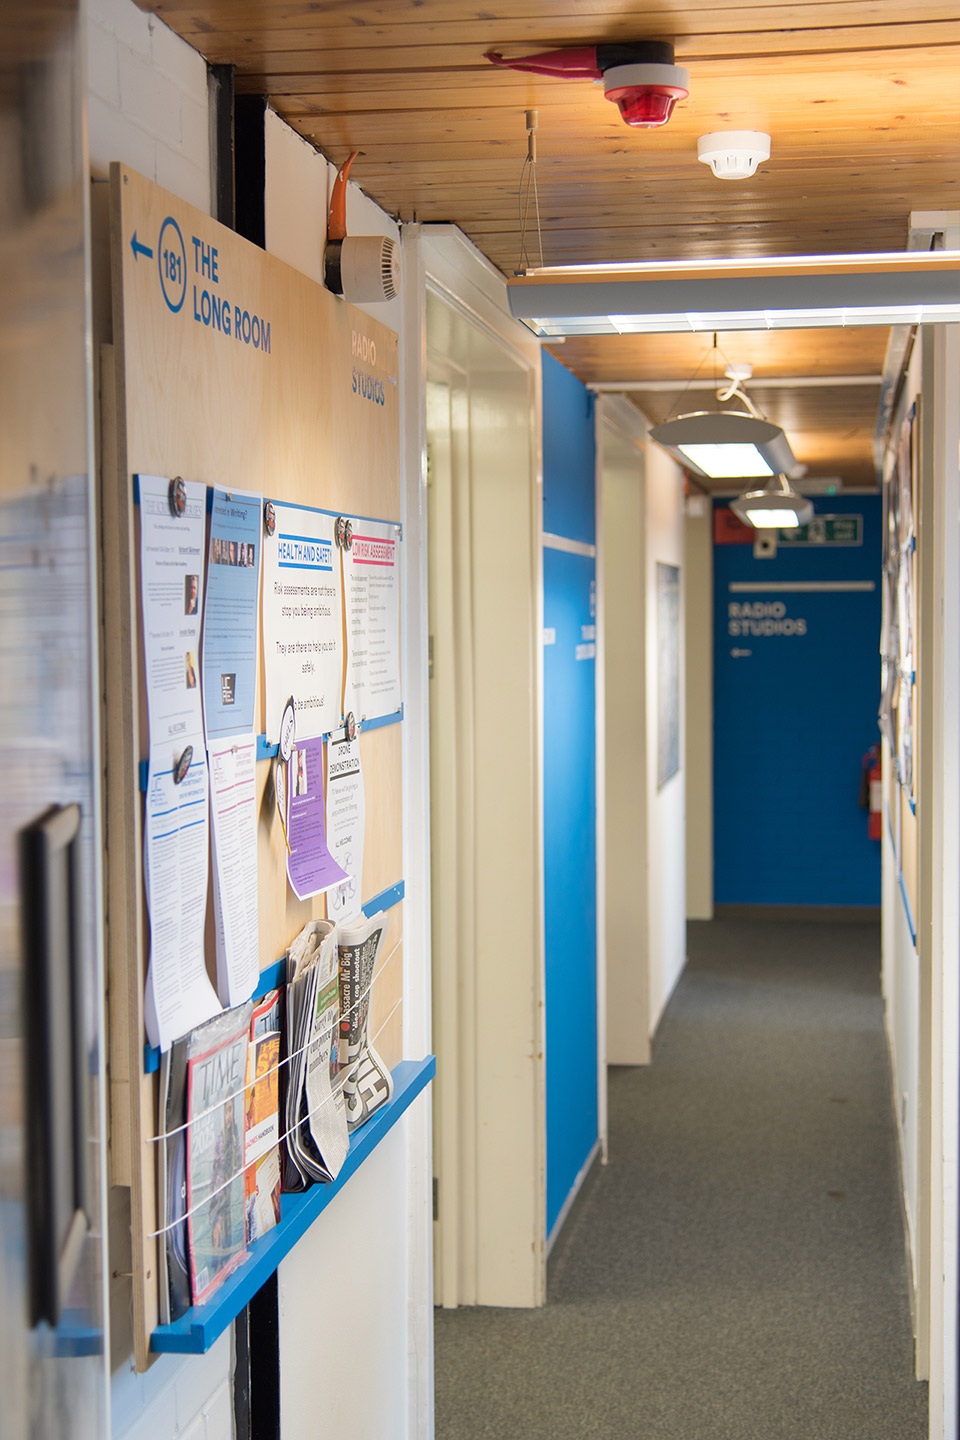 UCA Journalism studio space showing magnetic notice boards designed by Studio Mothership